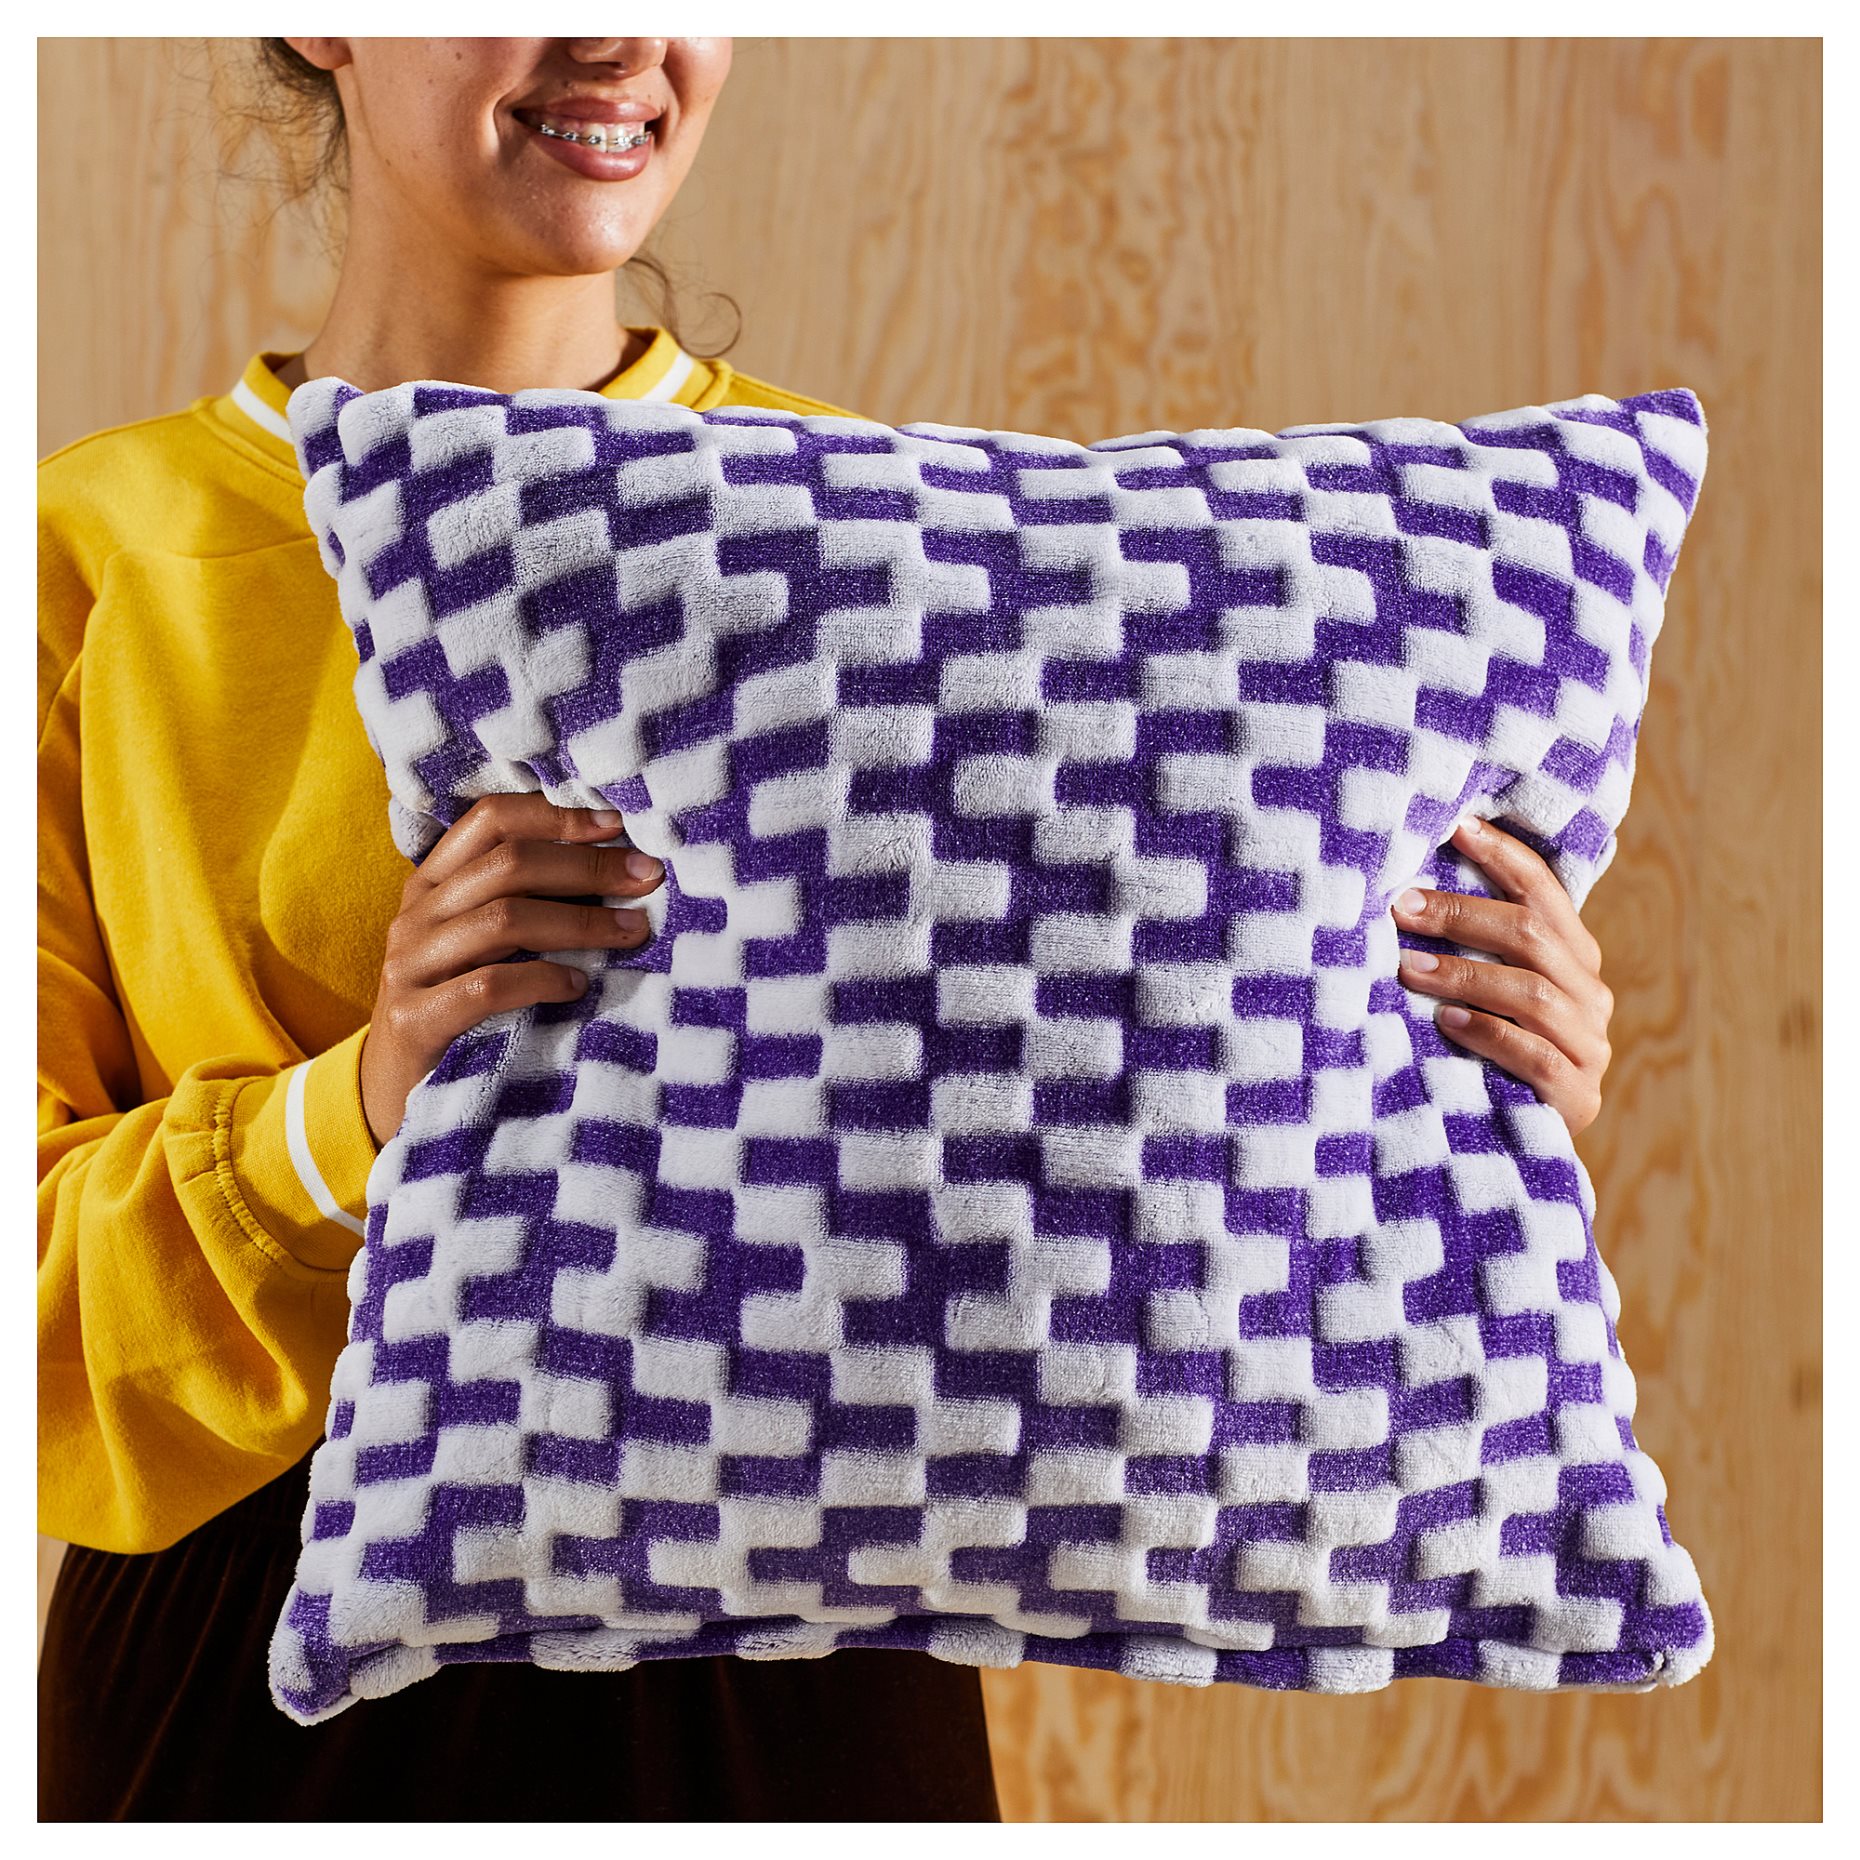 BLASKATA, cushion cover, 50x50 cm, 405.695.18